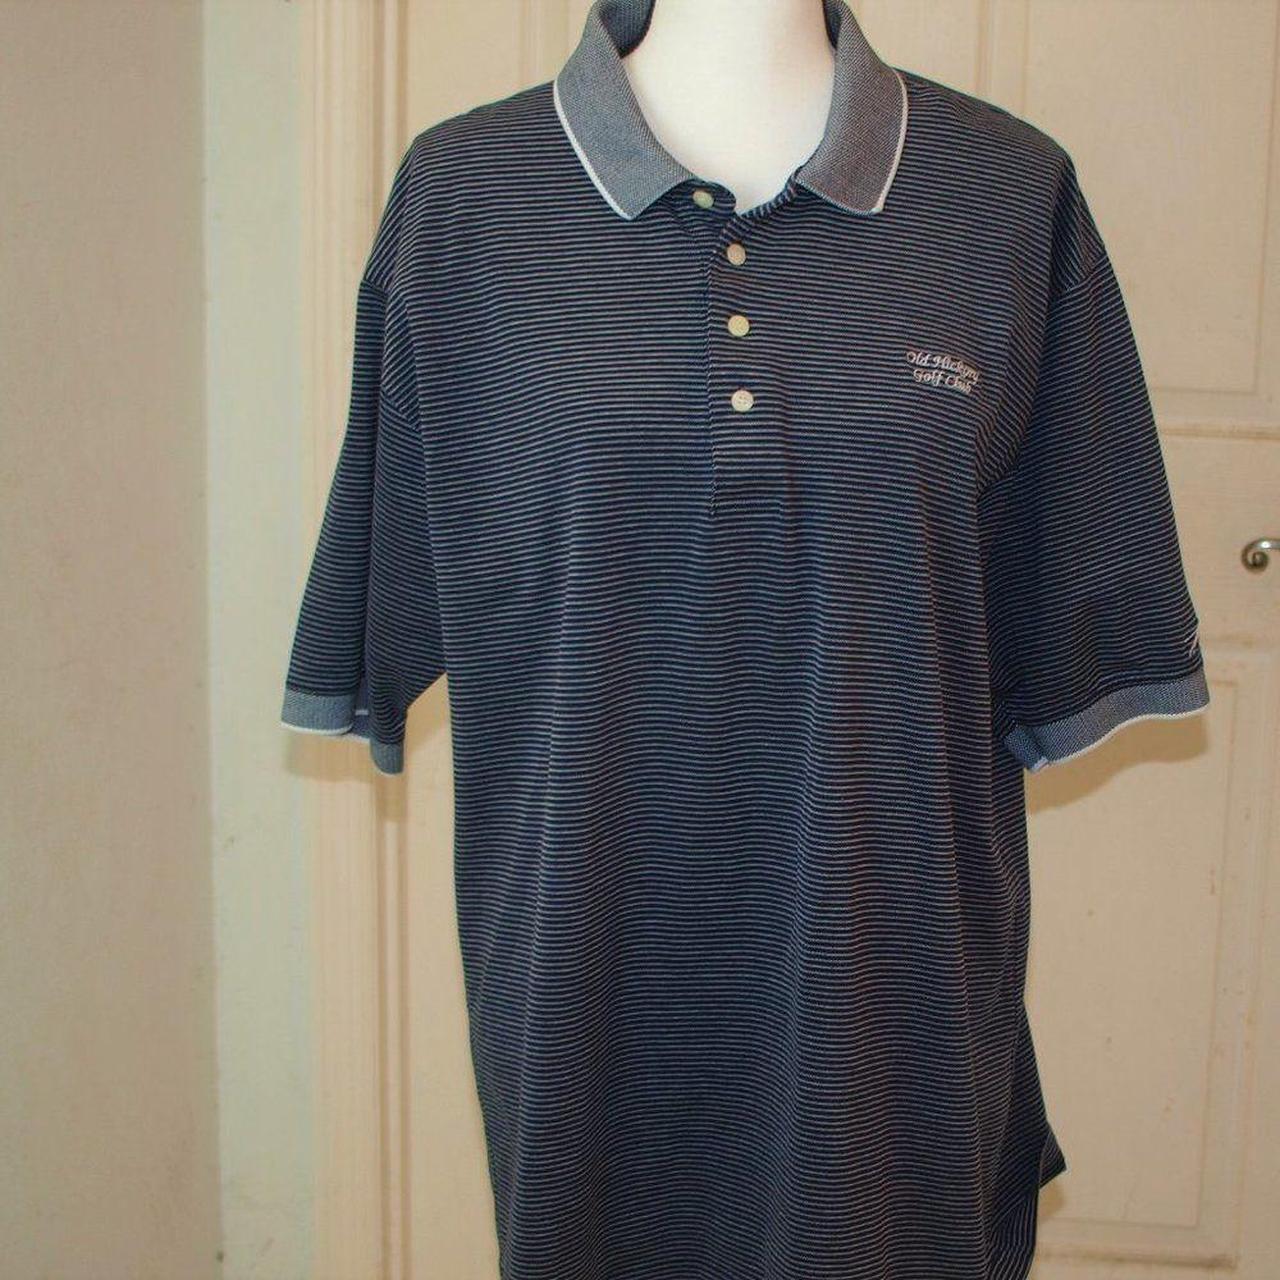 Product Image 1 - Slazenger Black Stripes Golf Shirt